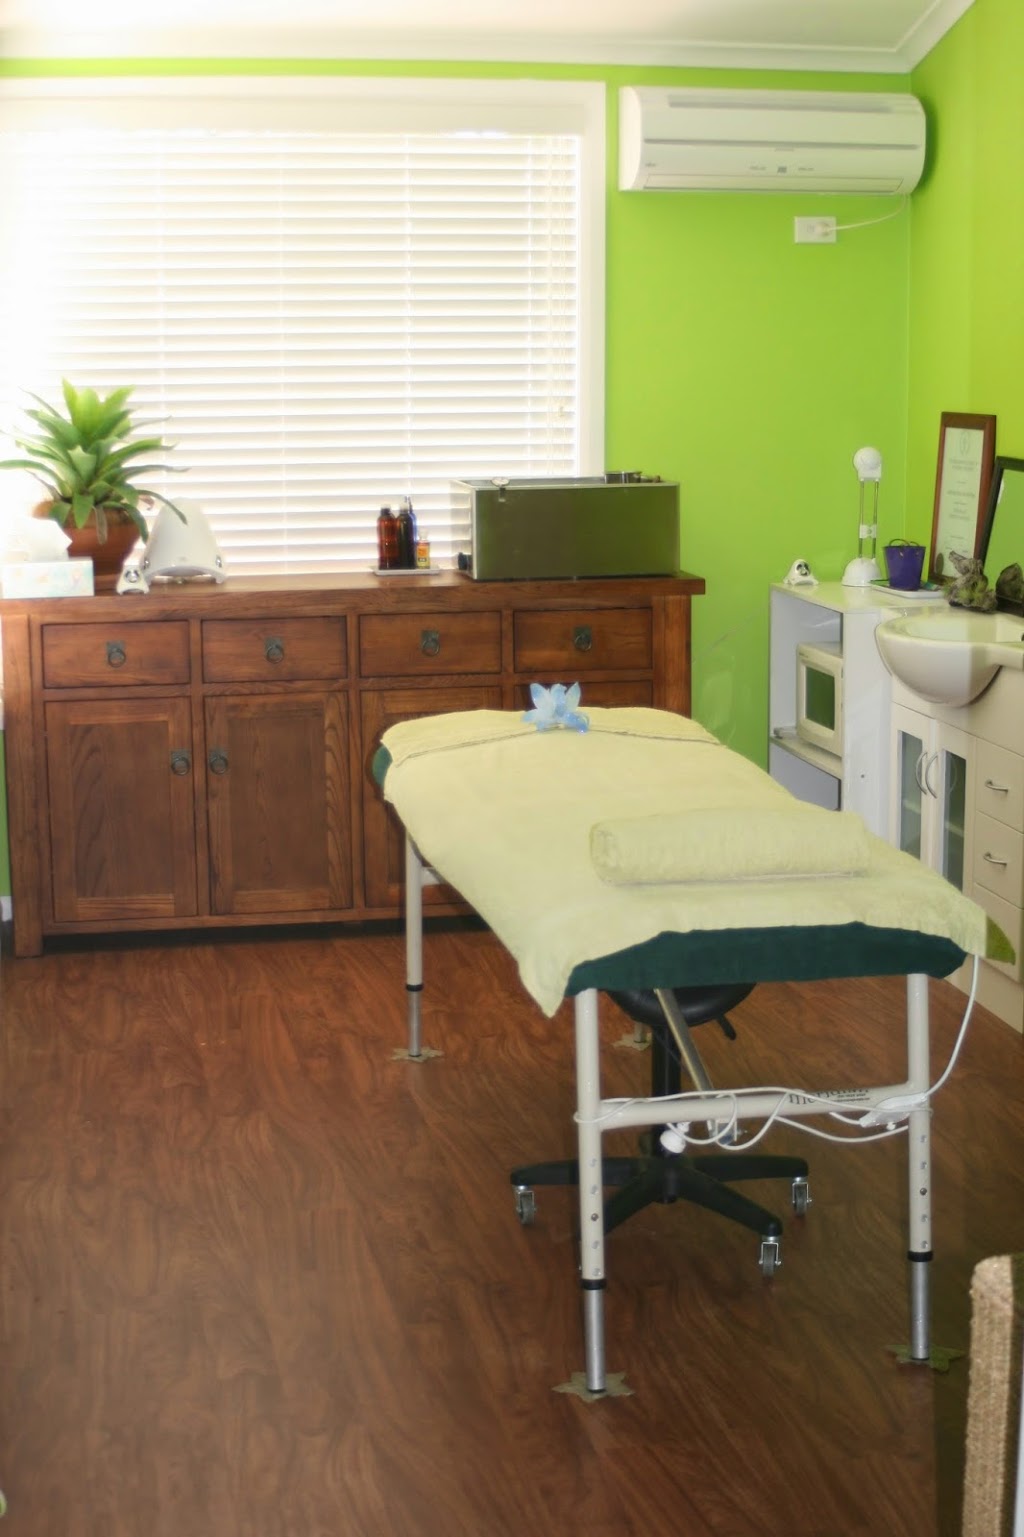 Marinas Massage Therapy | health | 78 Woy Woy Rd, Woy Woy NSW 2256, Australia | 0418432029 OR +61 418 432 029